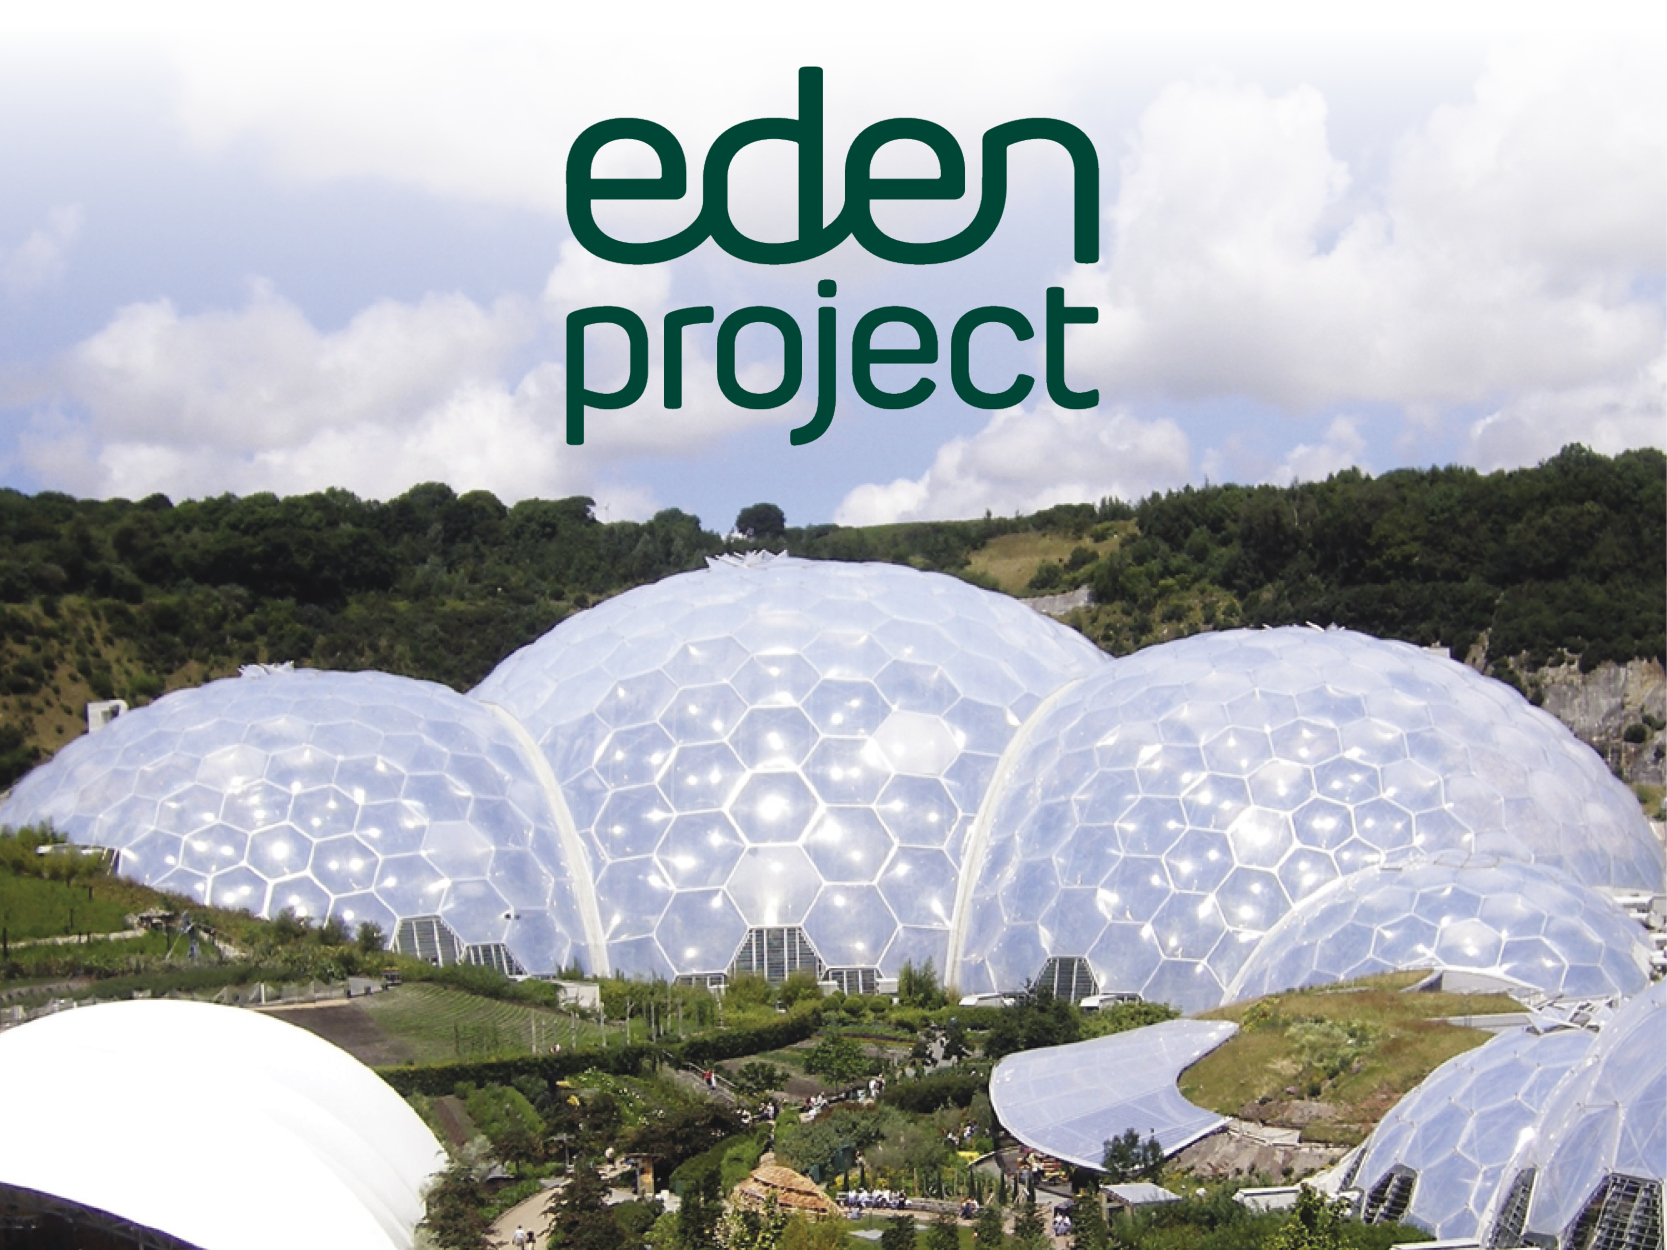 Water Coolers for Eden Project Marathon and Half Marathon